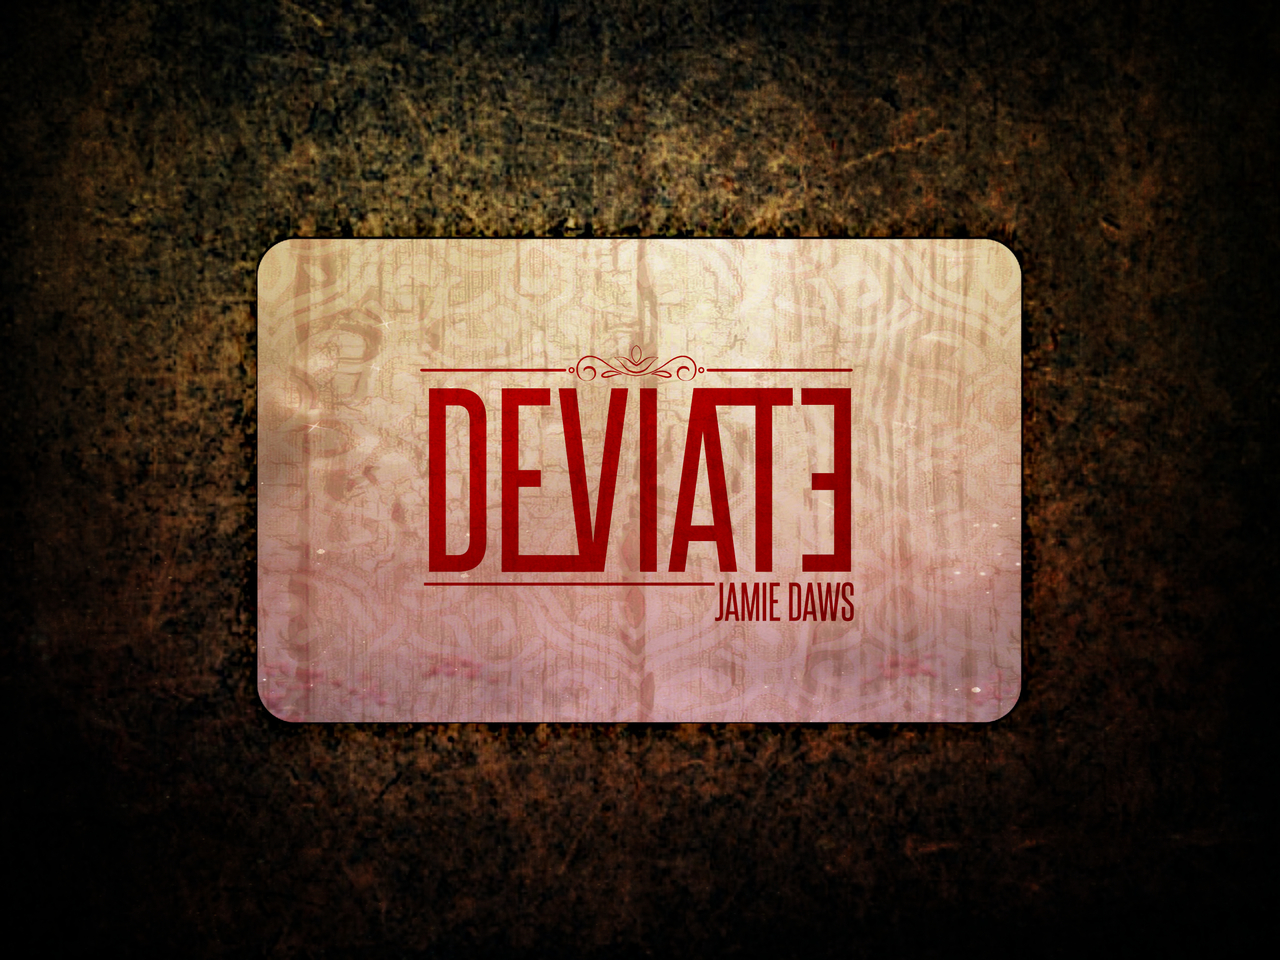 Deviate by Jamie Daws (MP4 Video Download)